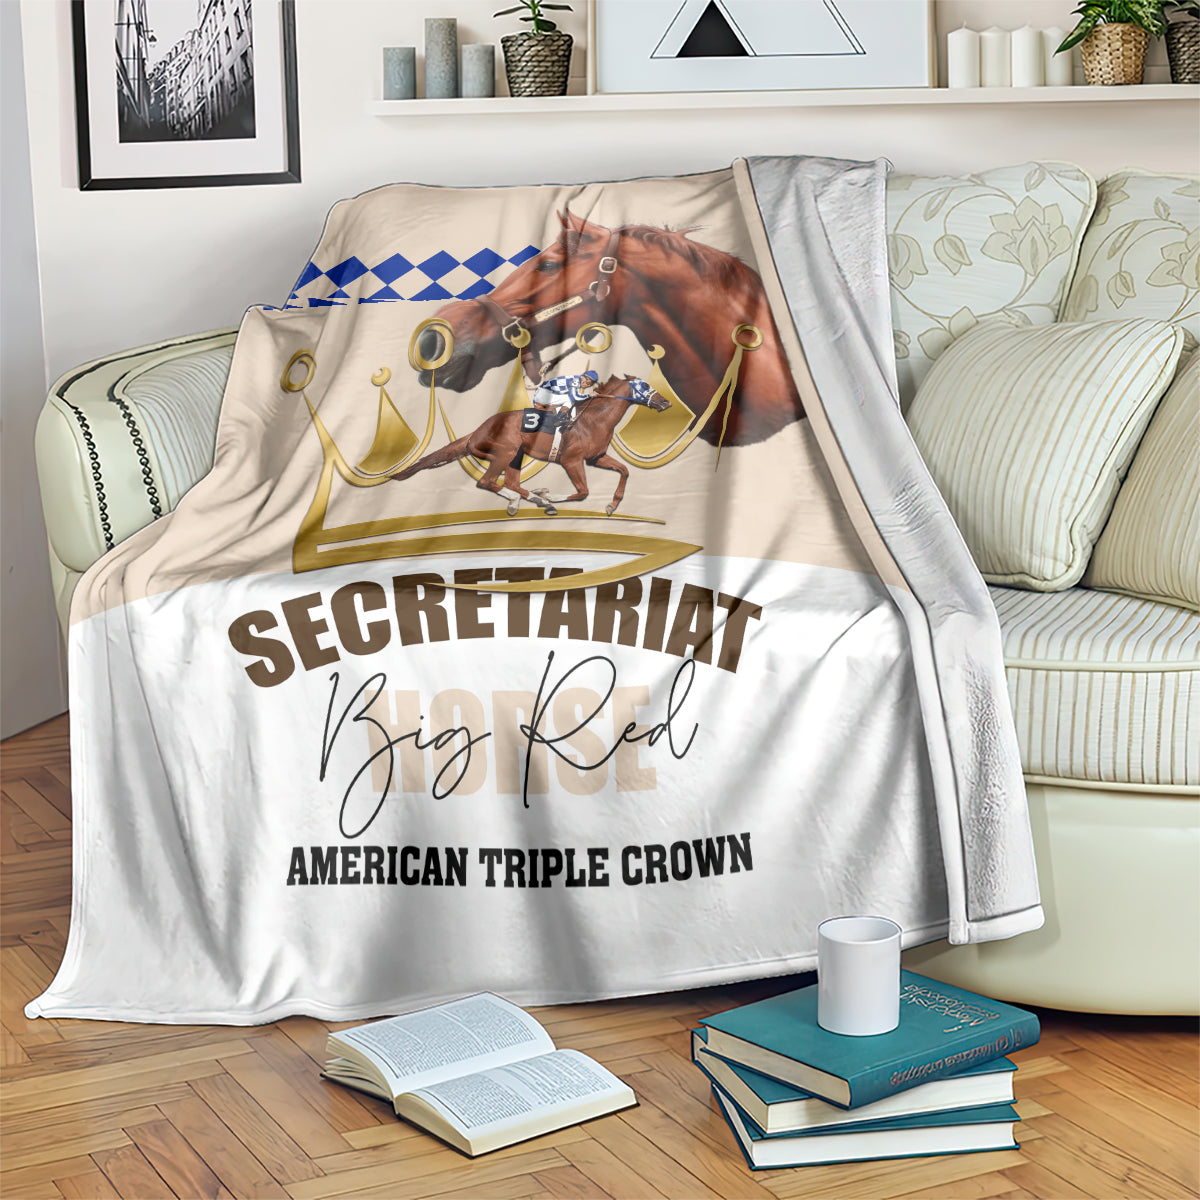 Secretariat 50th Anniversary Blanket American Triple Crown